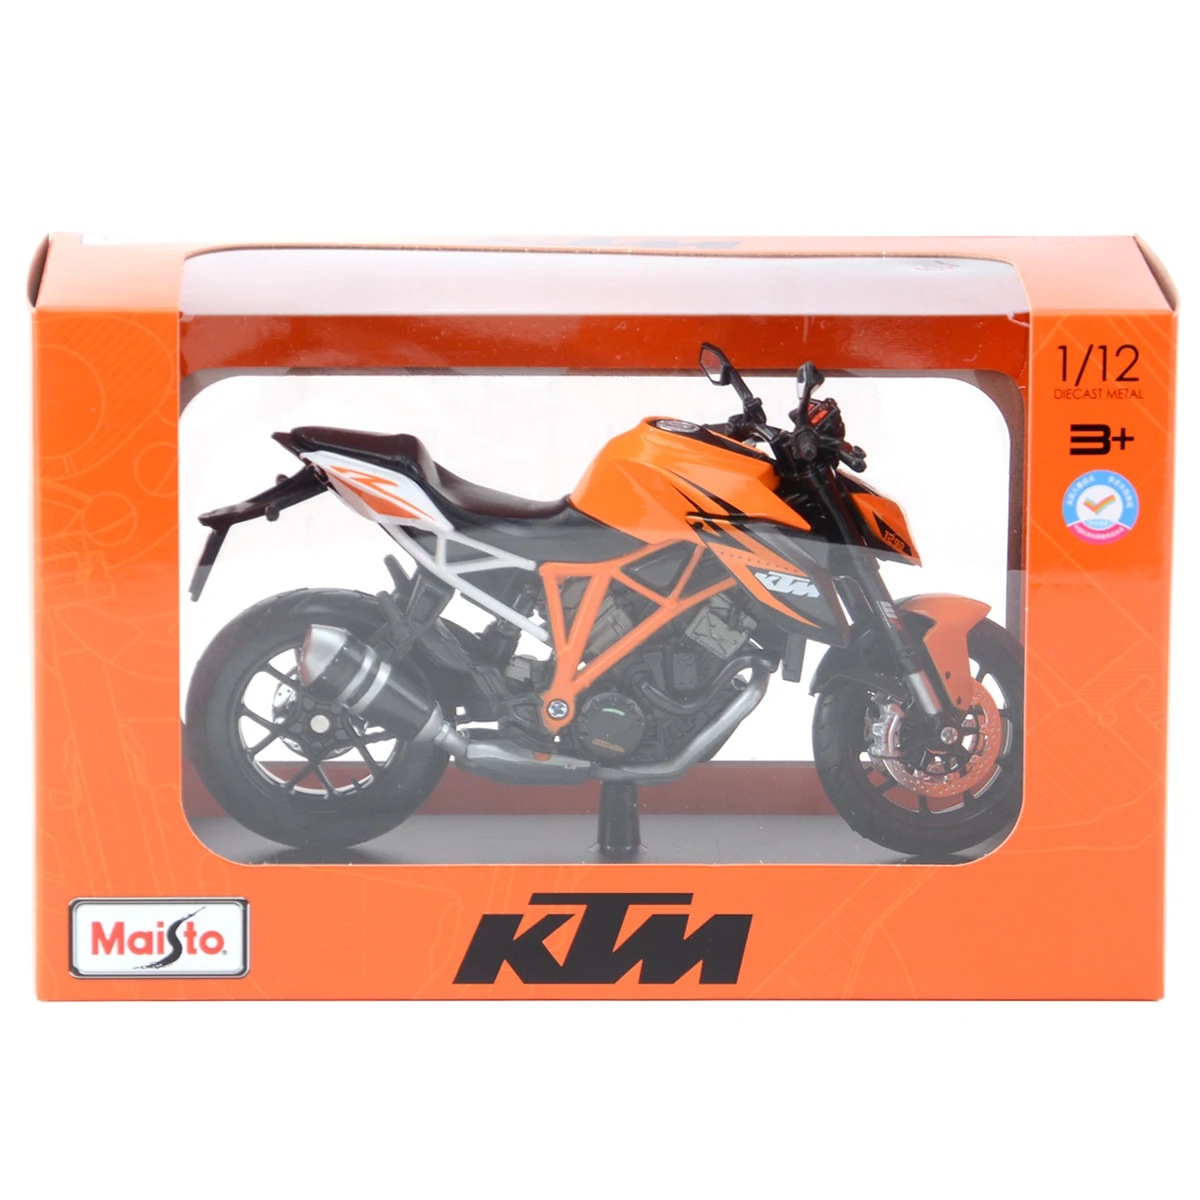 Maisto 1:12 KTM 1290 سوبر ديوك R مع حامل يموت يلقي السيارات هوايات تحصيل نموذج دراجة نارية اللعب